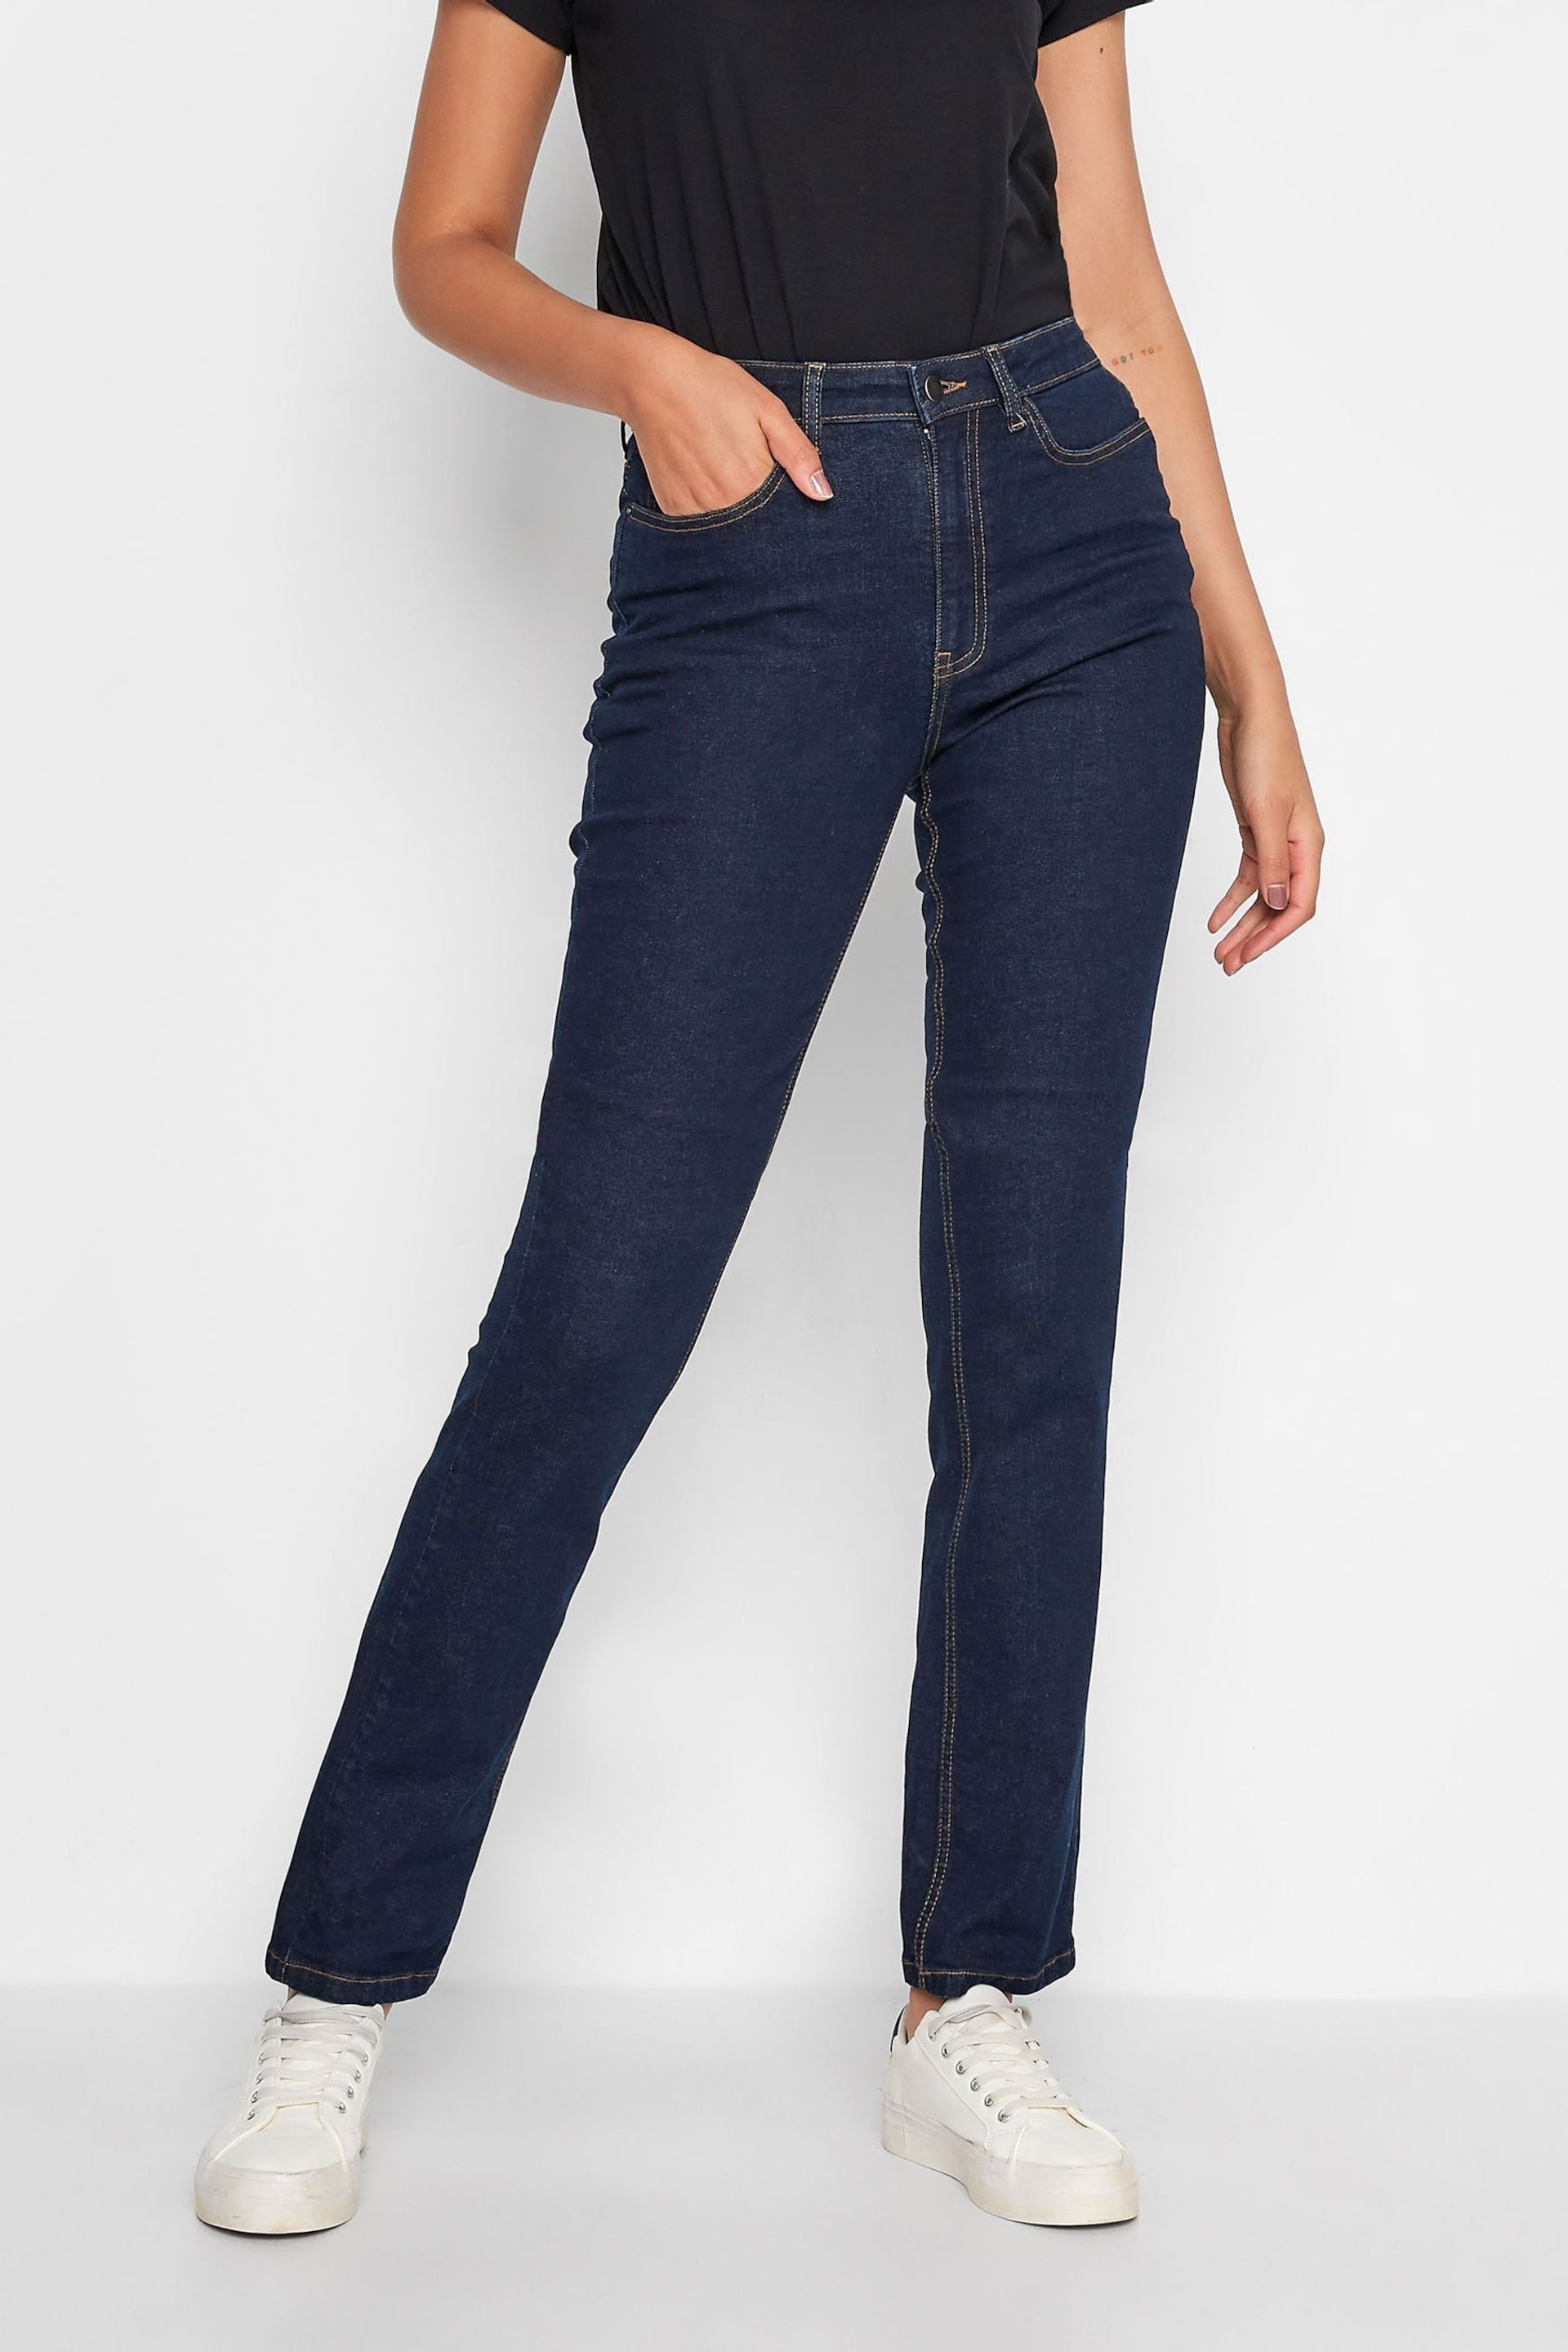 Long Tall Sally Blue Mia Slim Leg Jean - Image 1 of 4